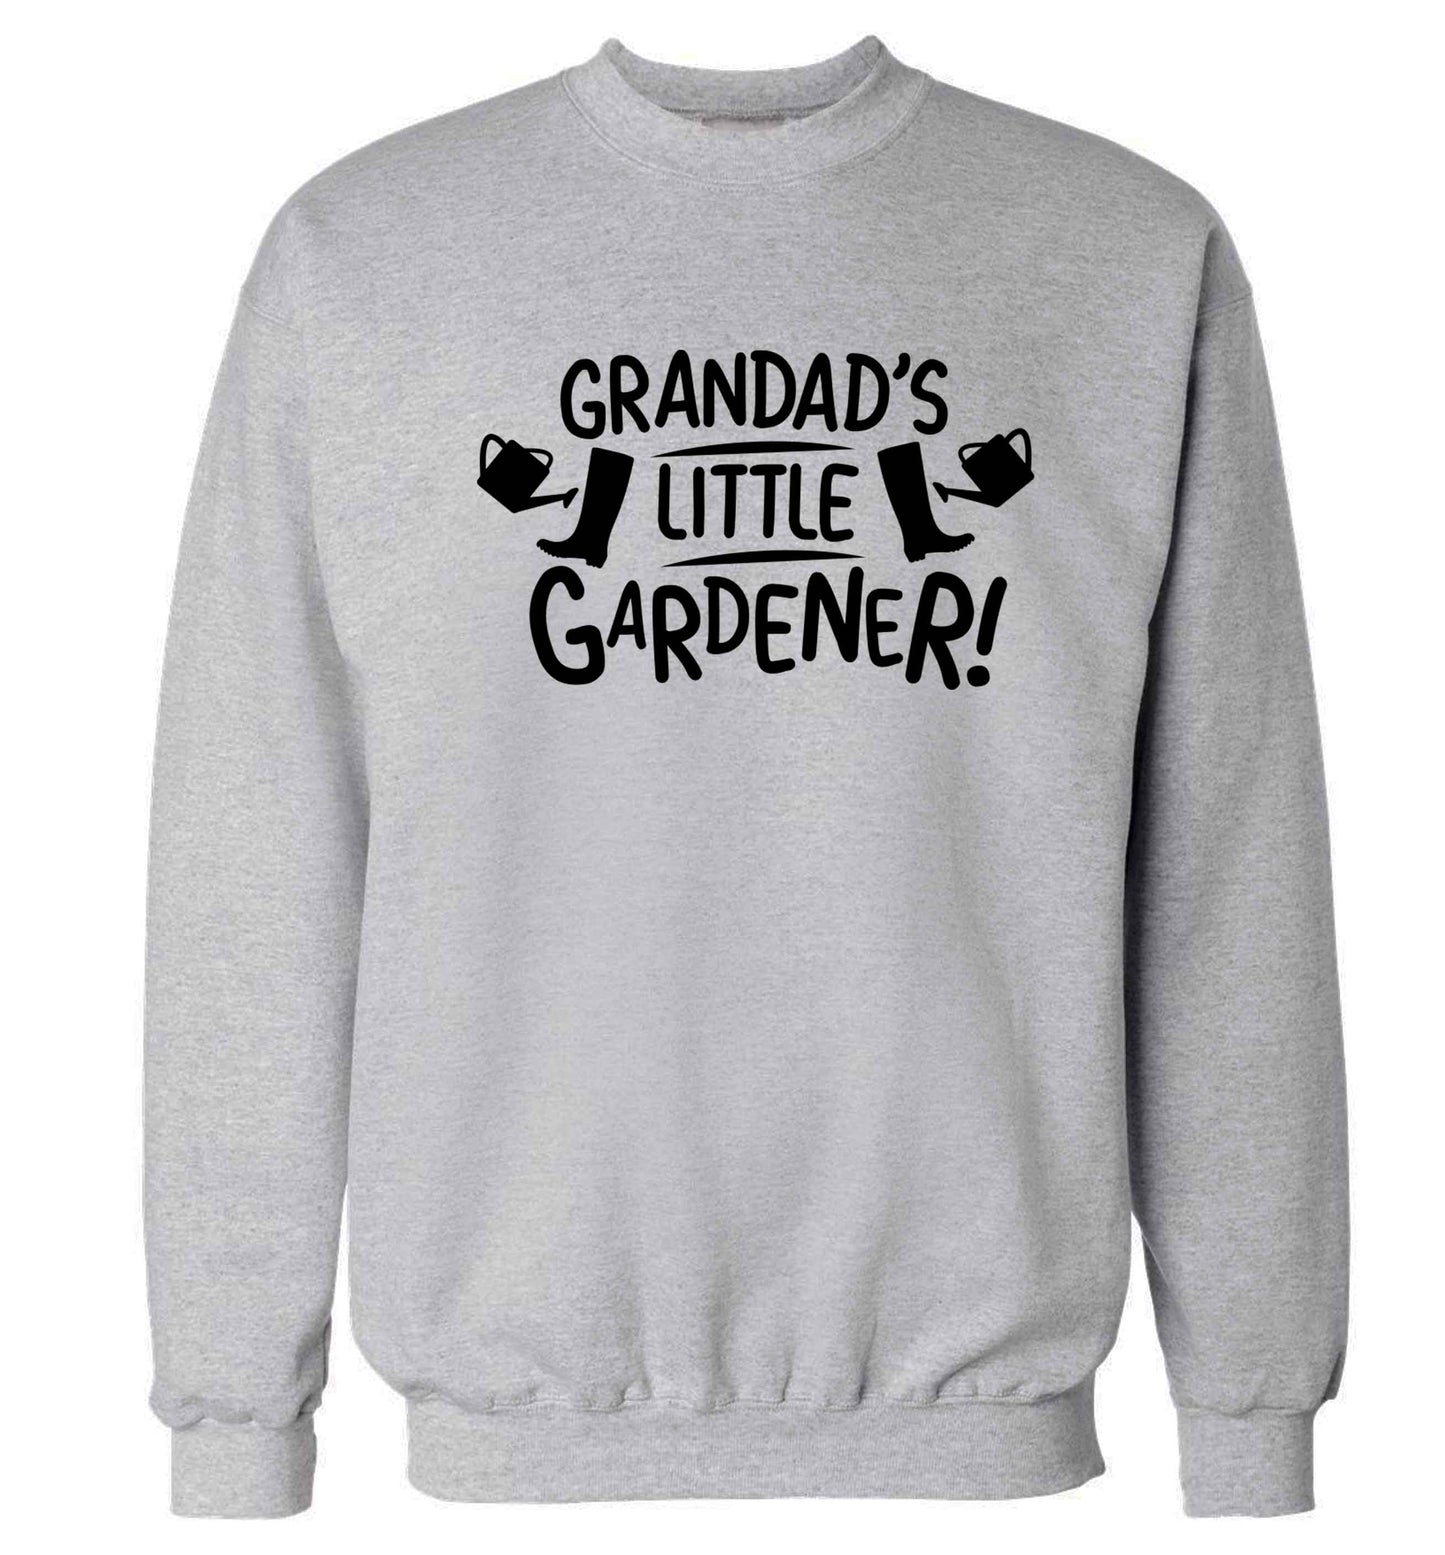 Grandad's little gardener Adult's unisex grey Sweater 2XL